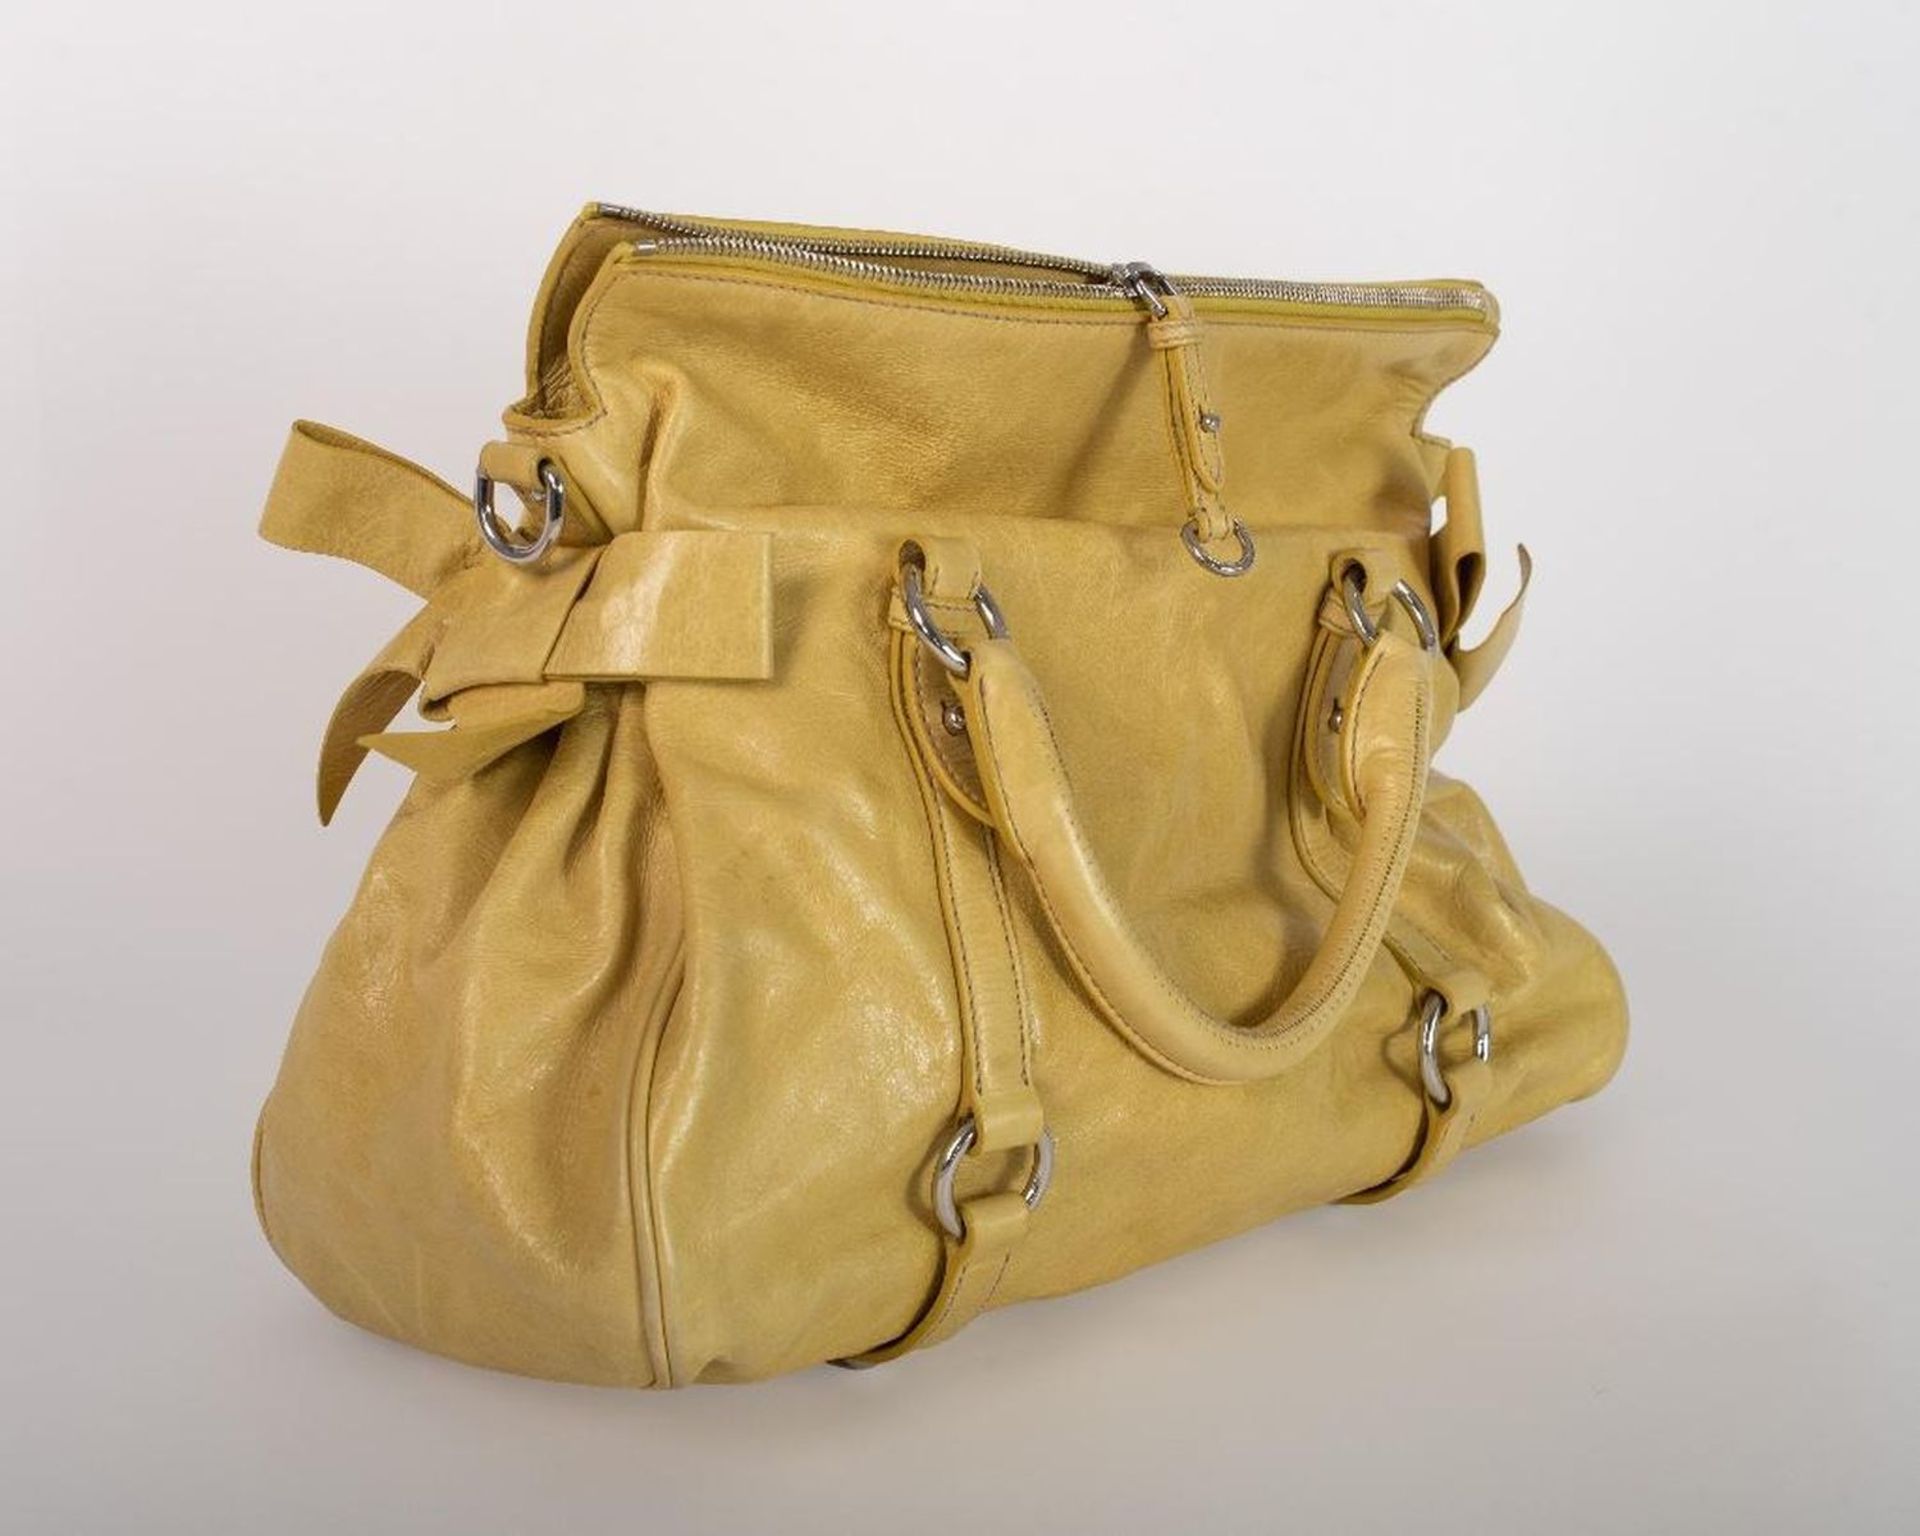 Miu Miu Vitello Lux Yellow Leather Handbag - Image 8 of 23